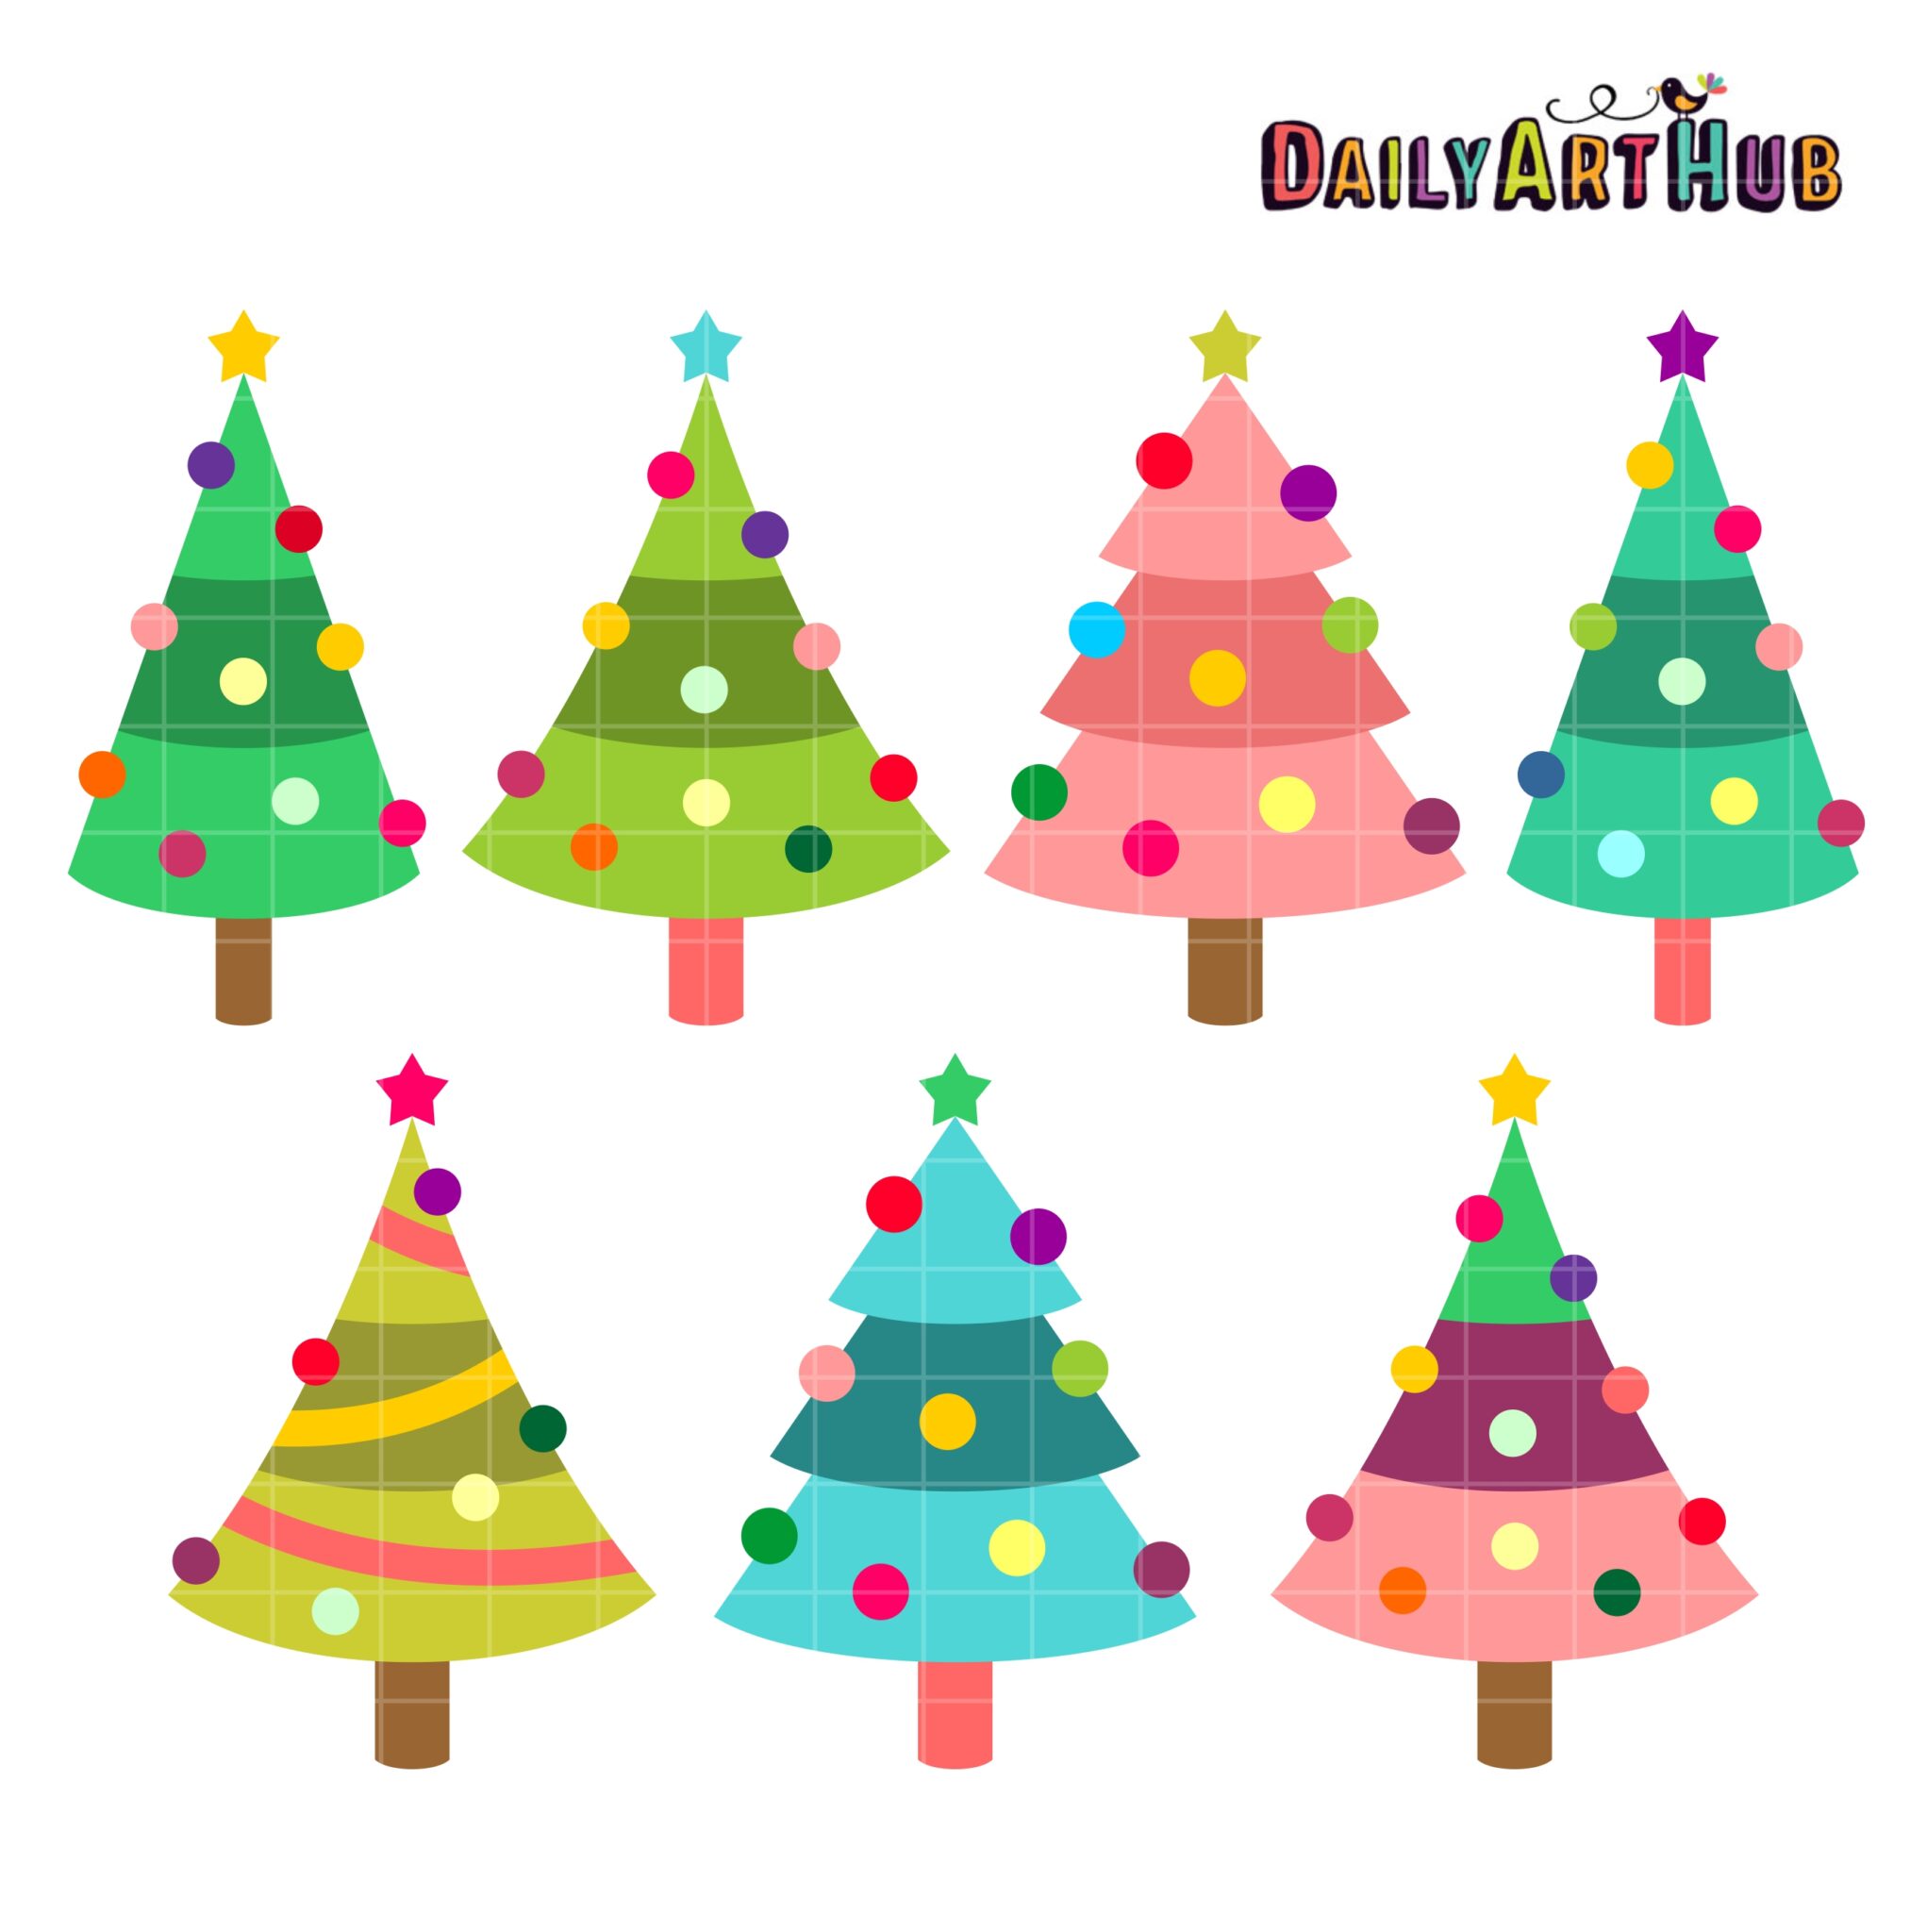 Simple Christmas Trees Clip Art Set – Daily Art Hub // Graphics, Alphabets & SVG